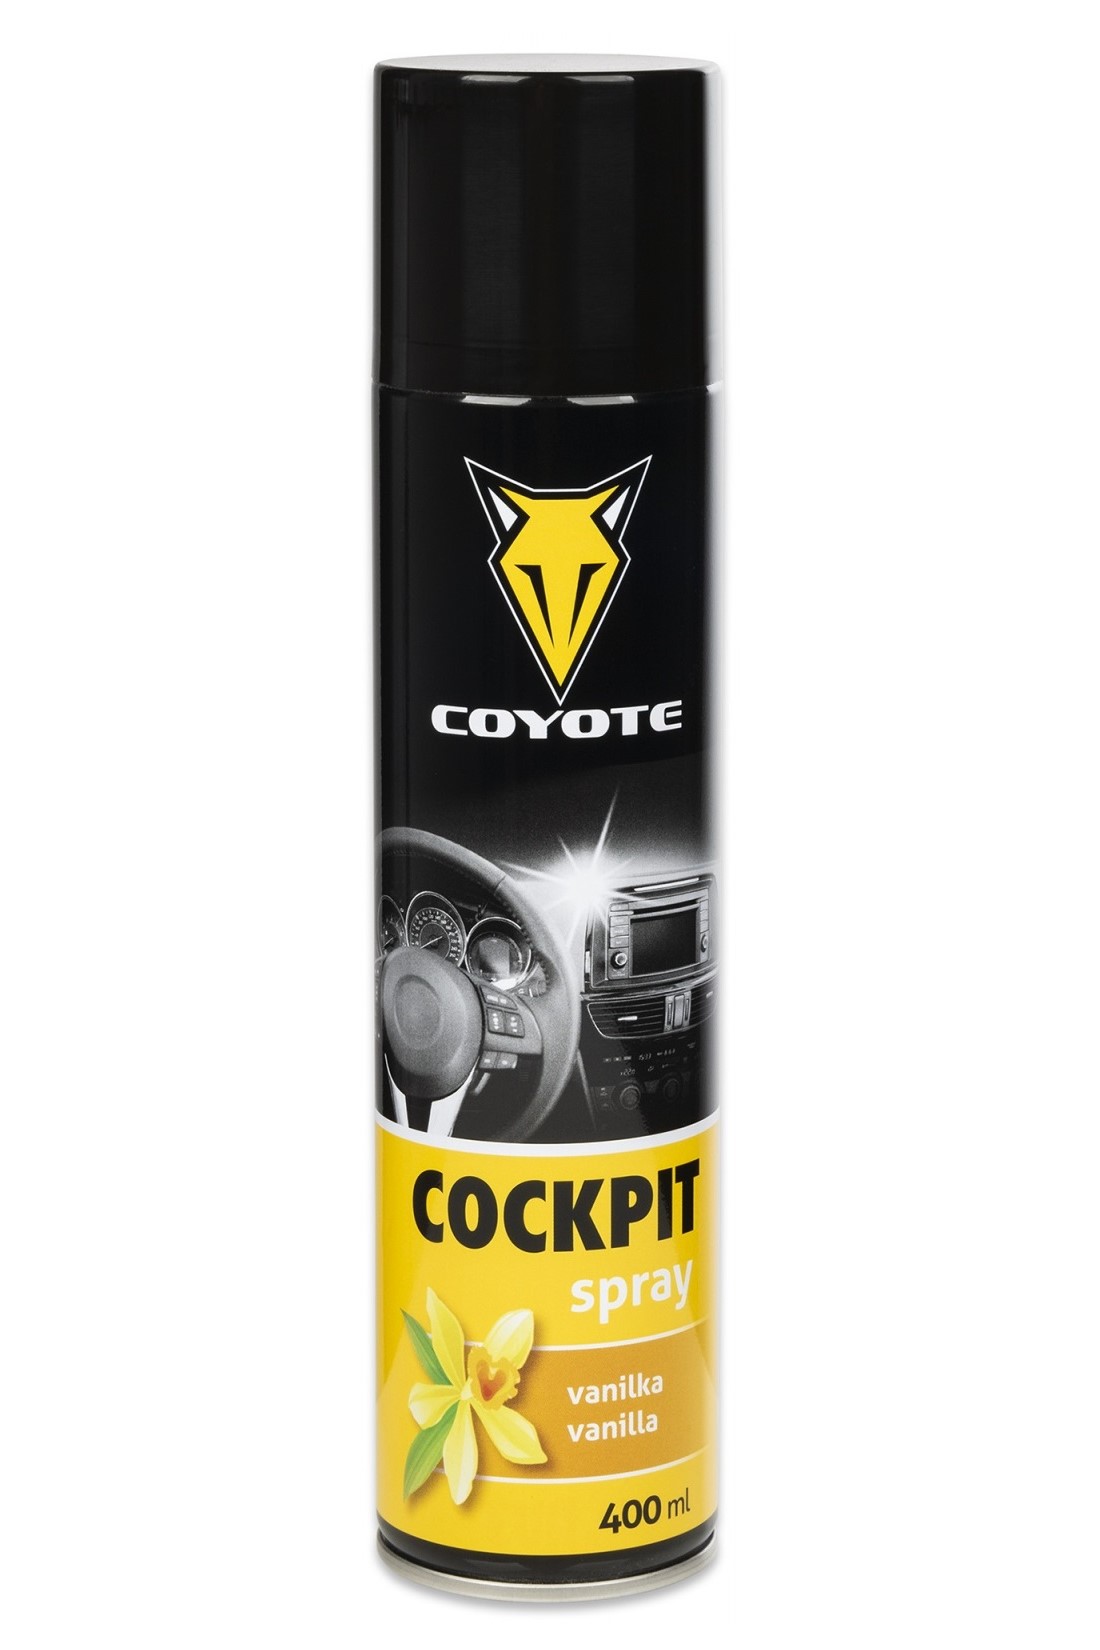 Coyote Cockpit čistící spray pro interiér aut 400 ml Vanilka